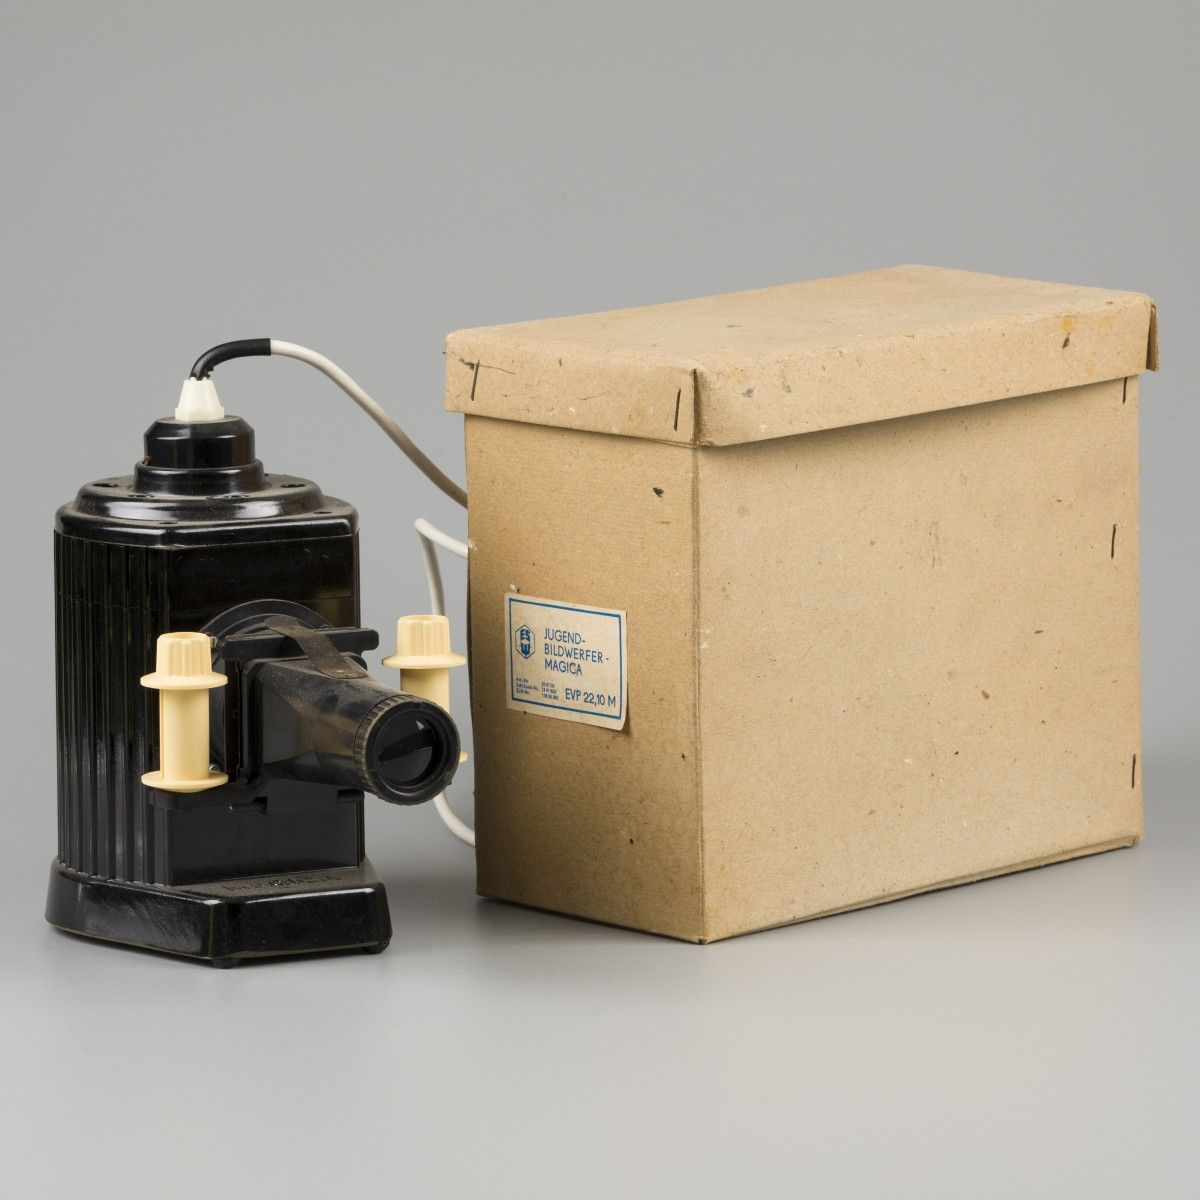 A bakelite magic lantern "Jugend Bildwerfer-Magica" EVP 22,10 mm. Im Originalkar&hellip;